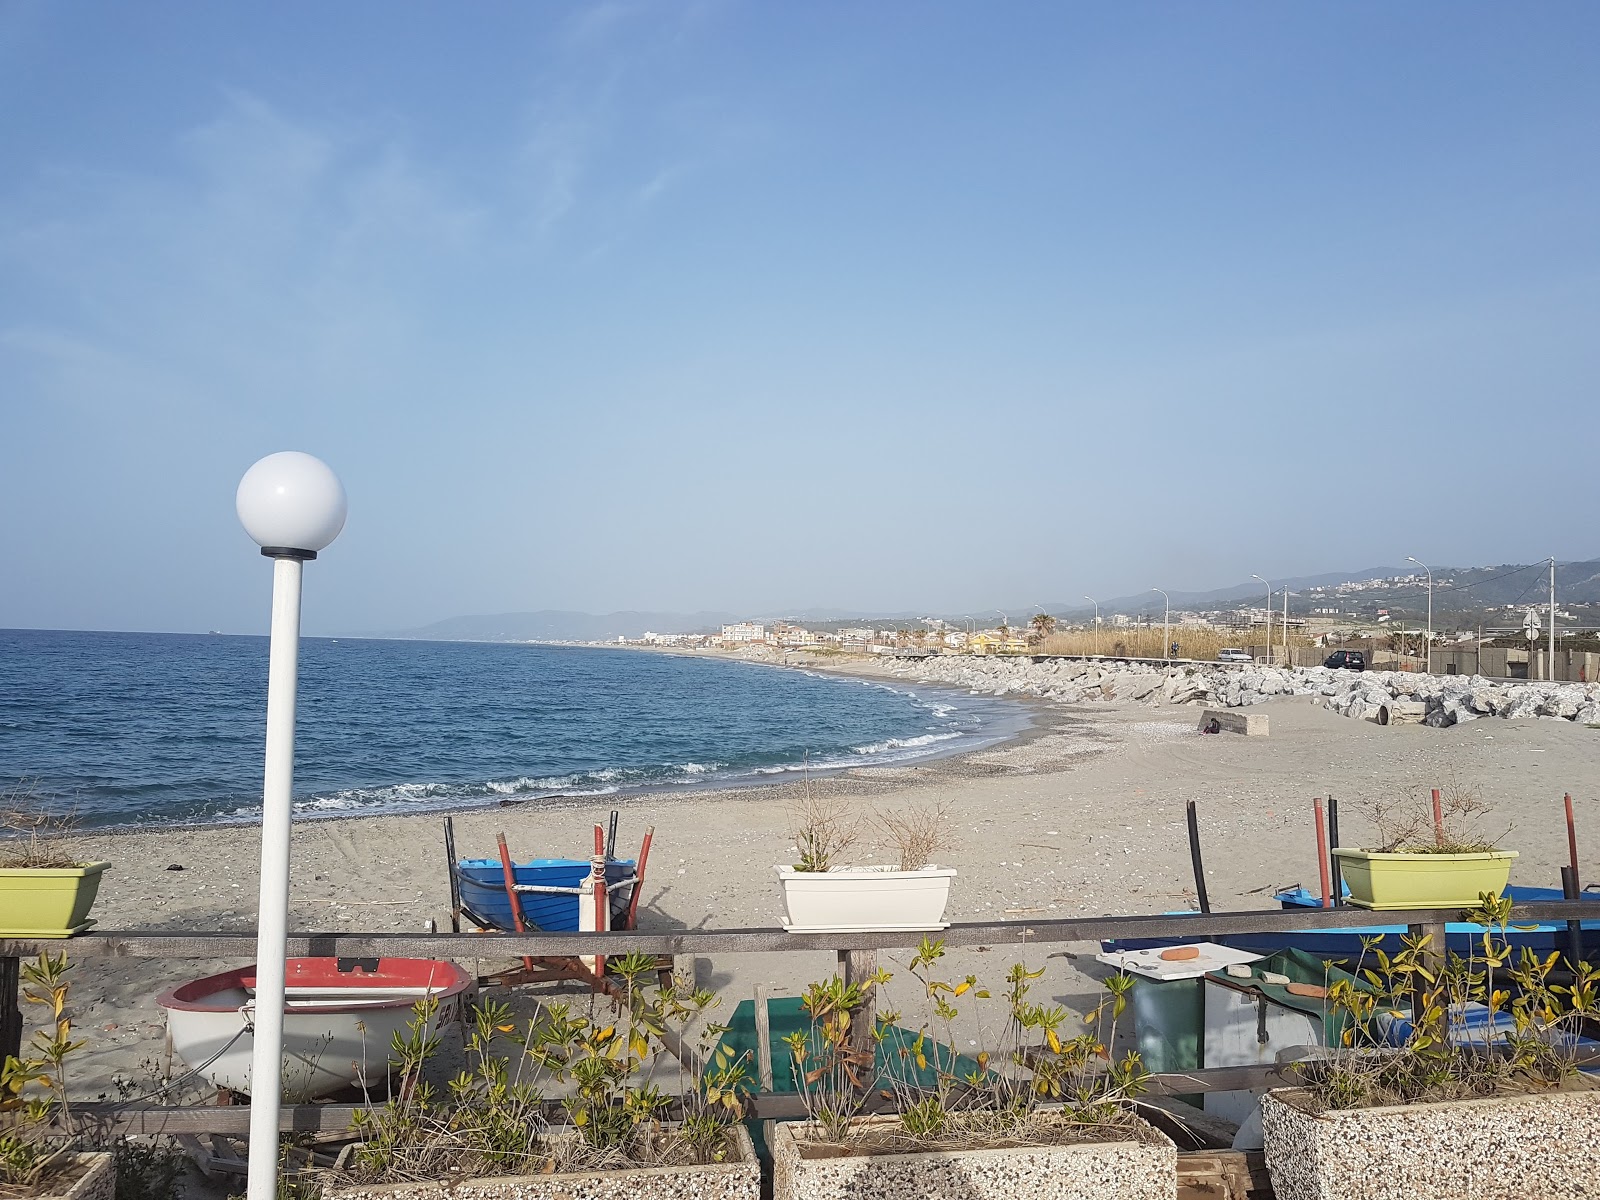 Photo of Venetico Marina beach beach resort area